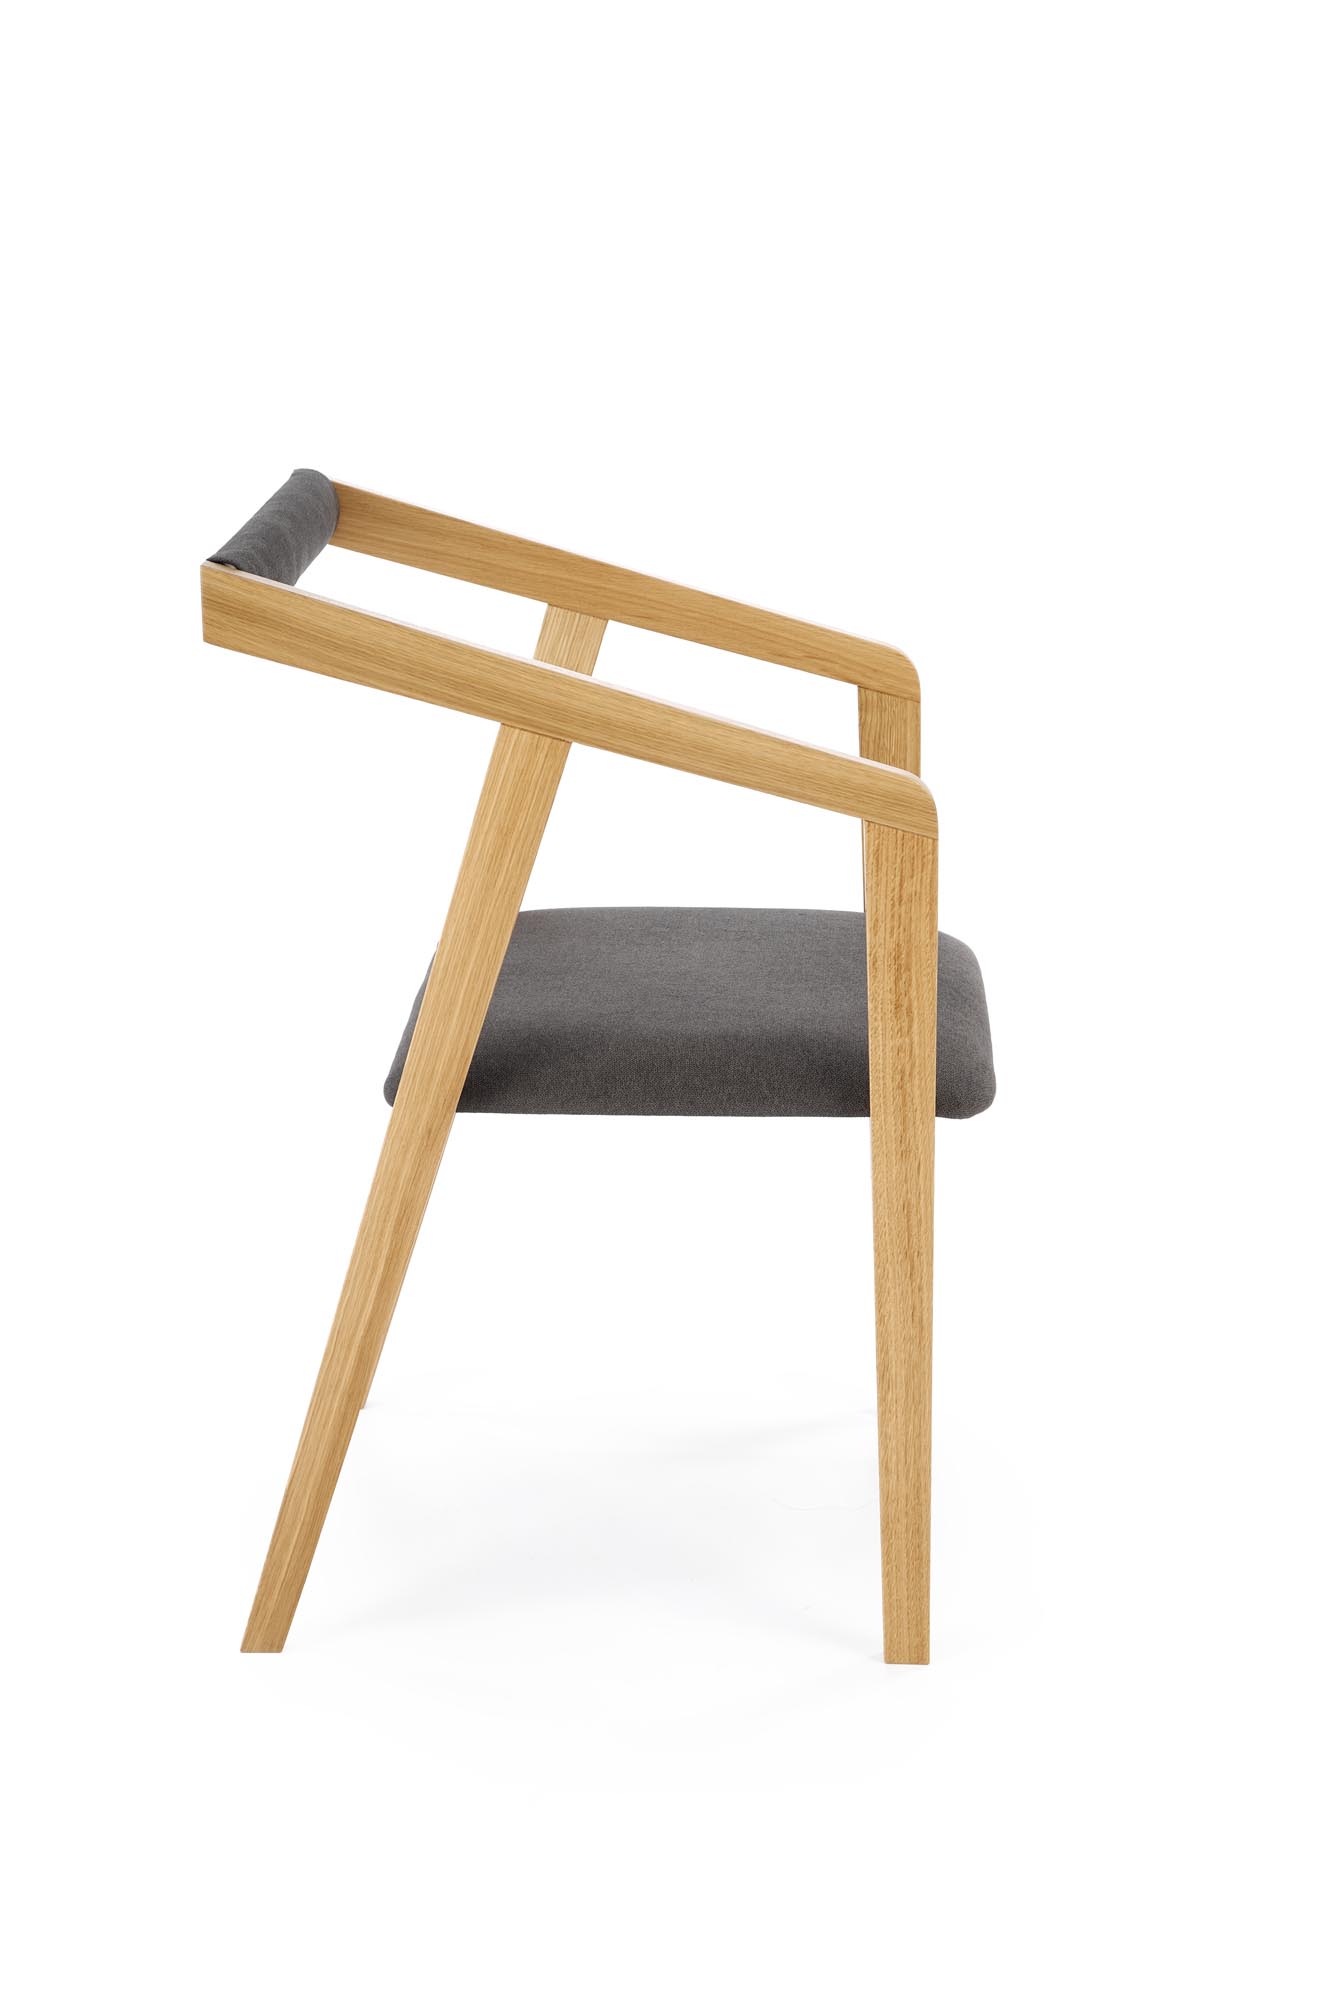 Židle s čalouněným siedziskeim Azul 2 - Dub přírodní / popel židle s čalouněným siedziskeim azul 2 - Dub přírodní / popel